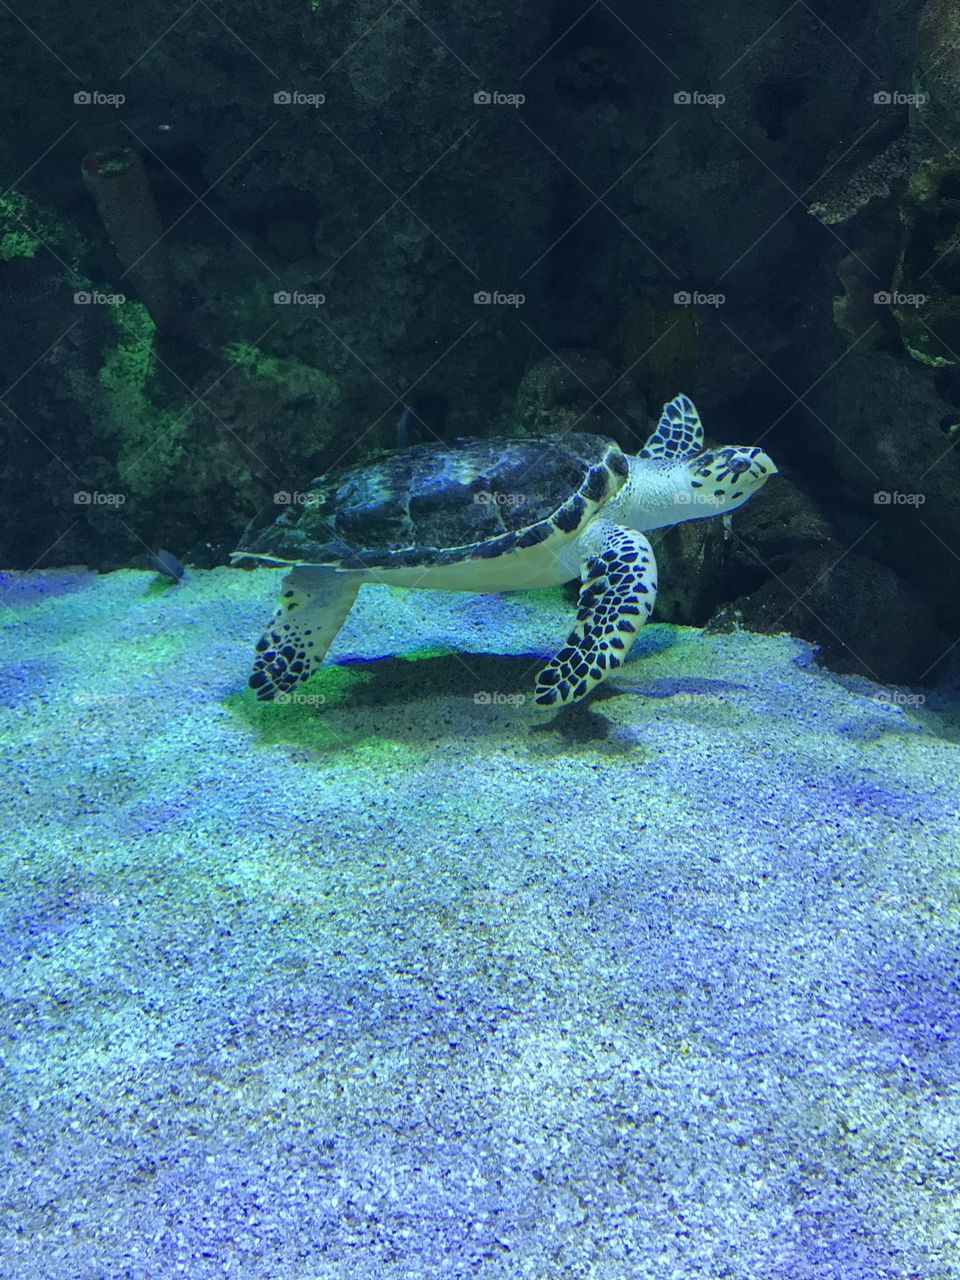 Turtle inside the aquarium swimming in the tank